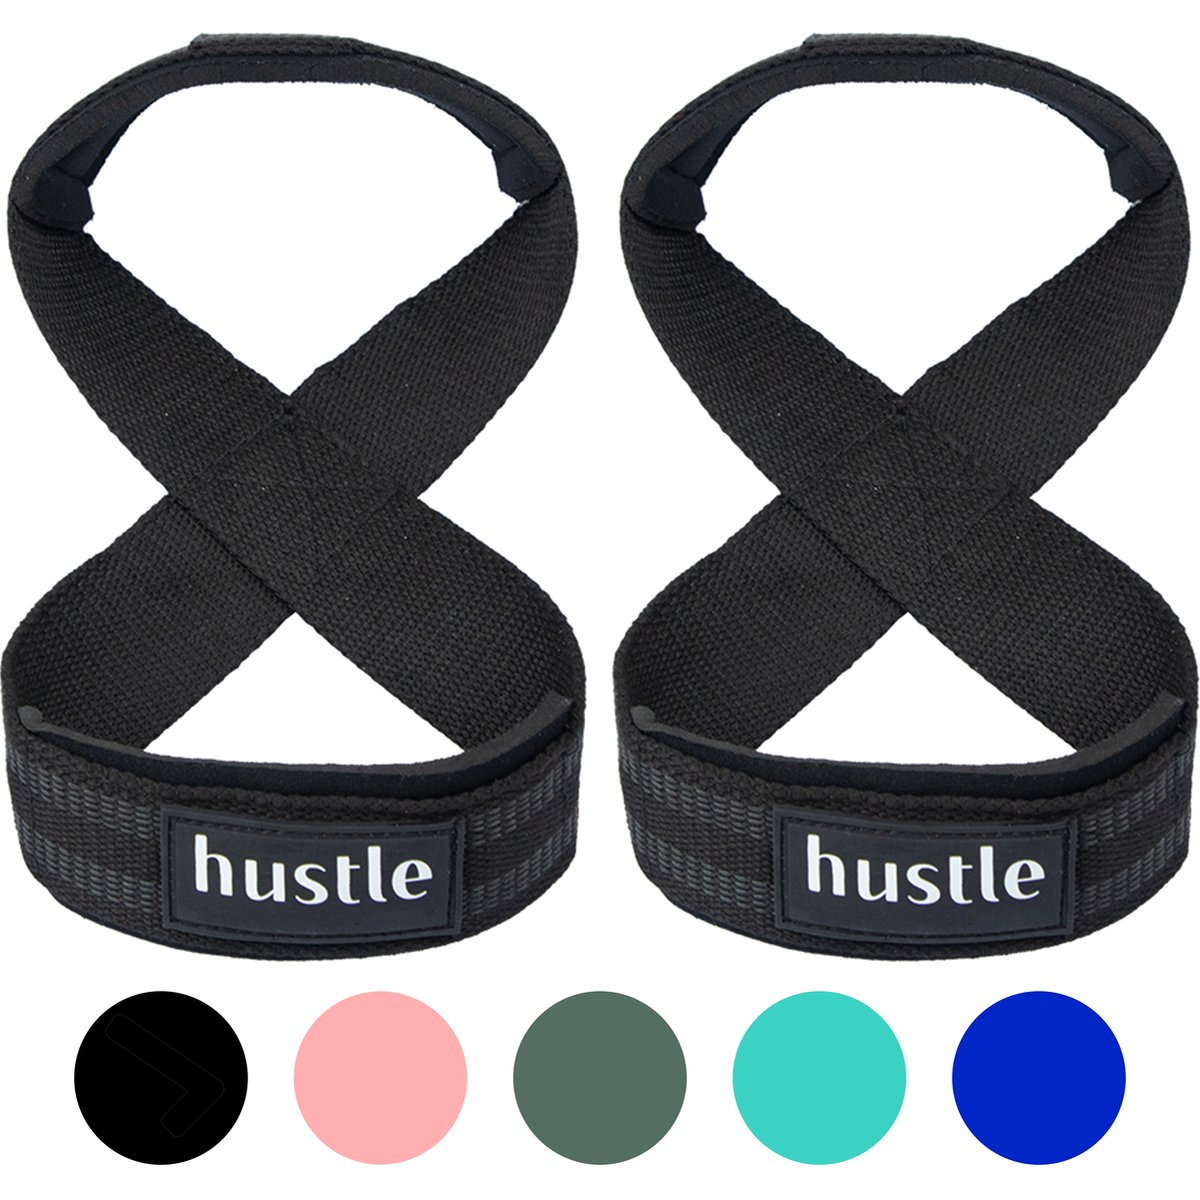 hustle - Zwarte/Grijze Figure 8 Straps - met Padding - Padded - Lifting Grips/Hooks/Straps - Maat S - 1 Paar